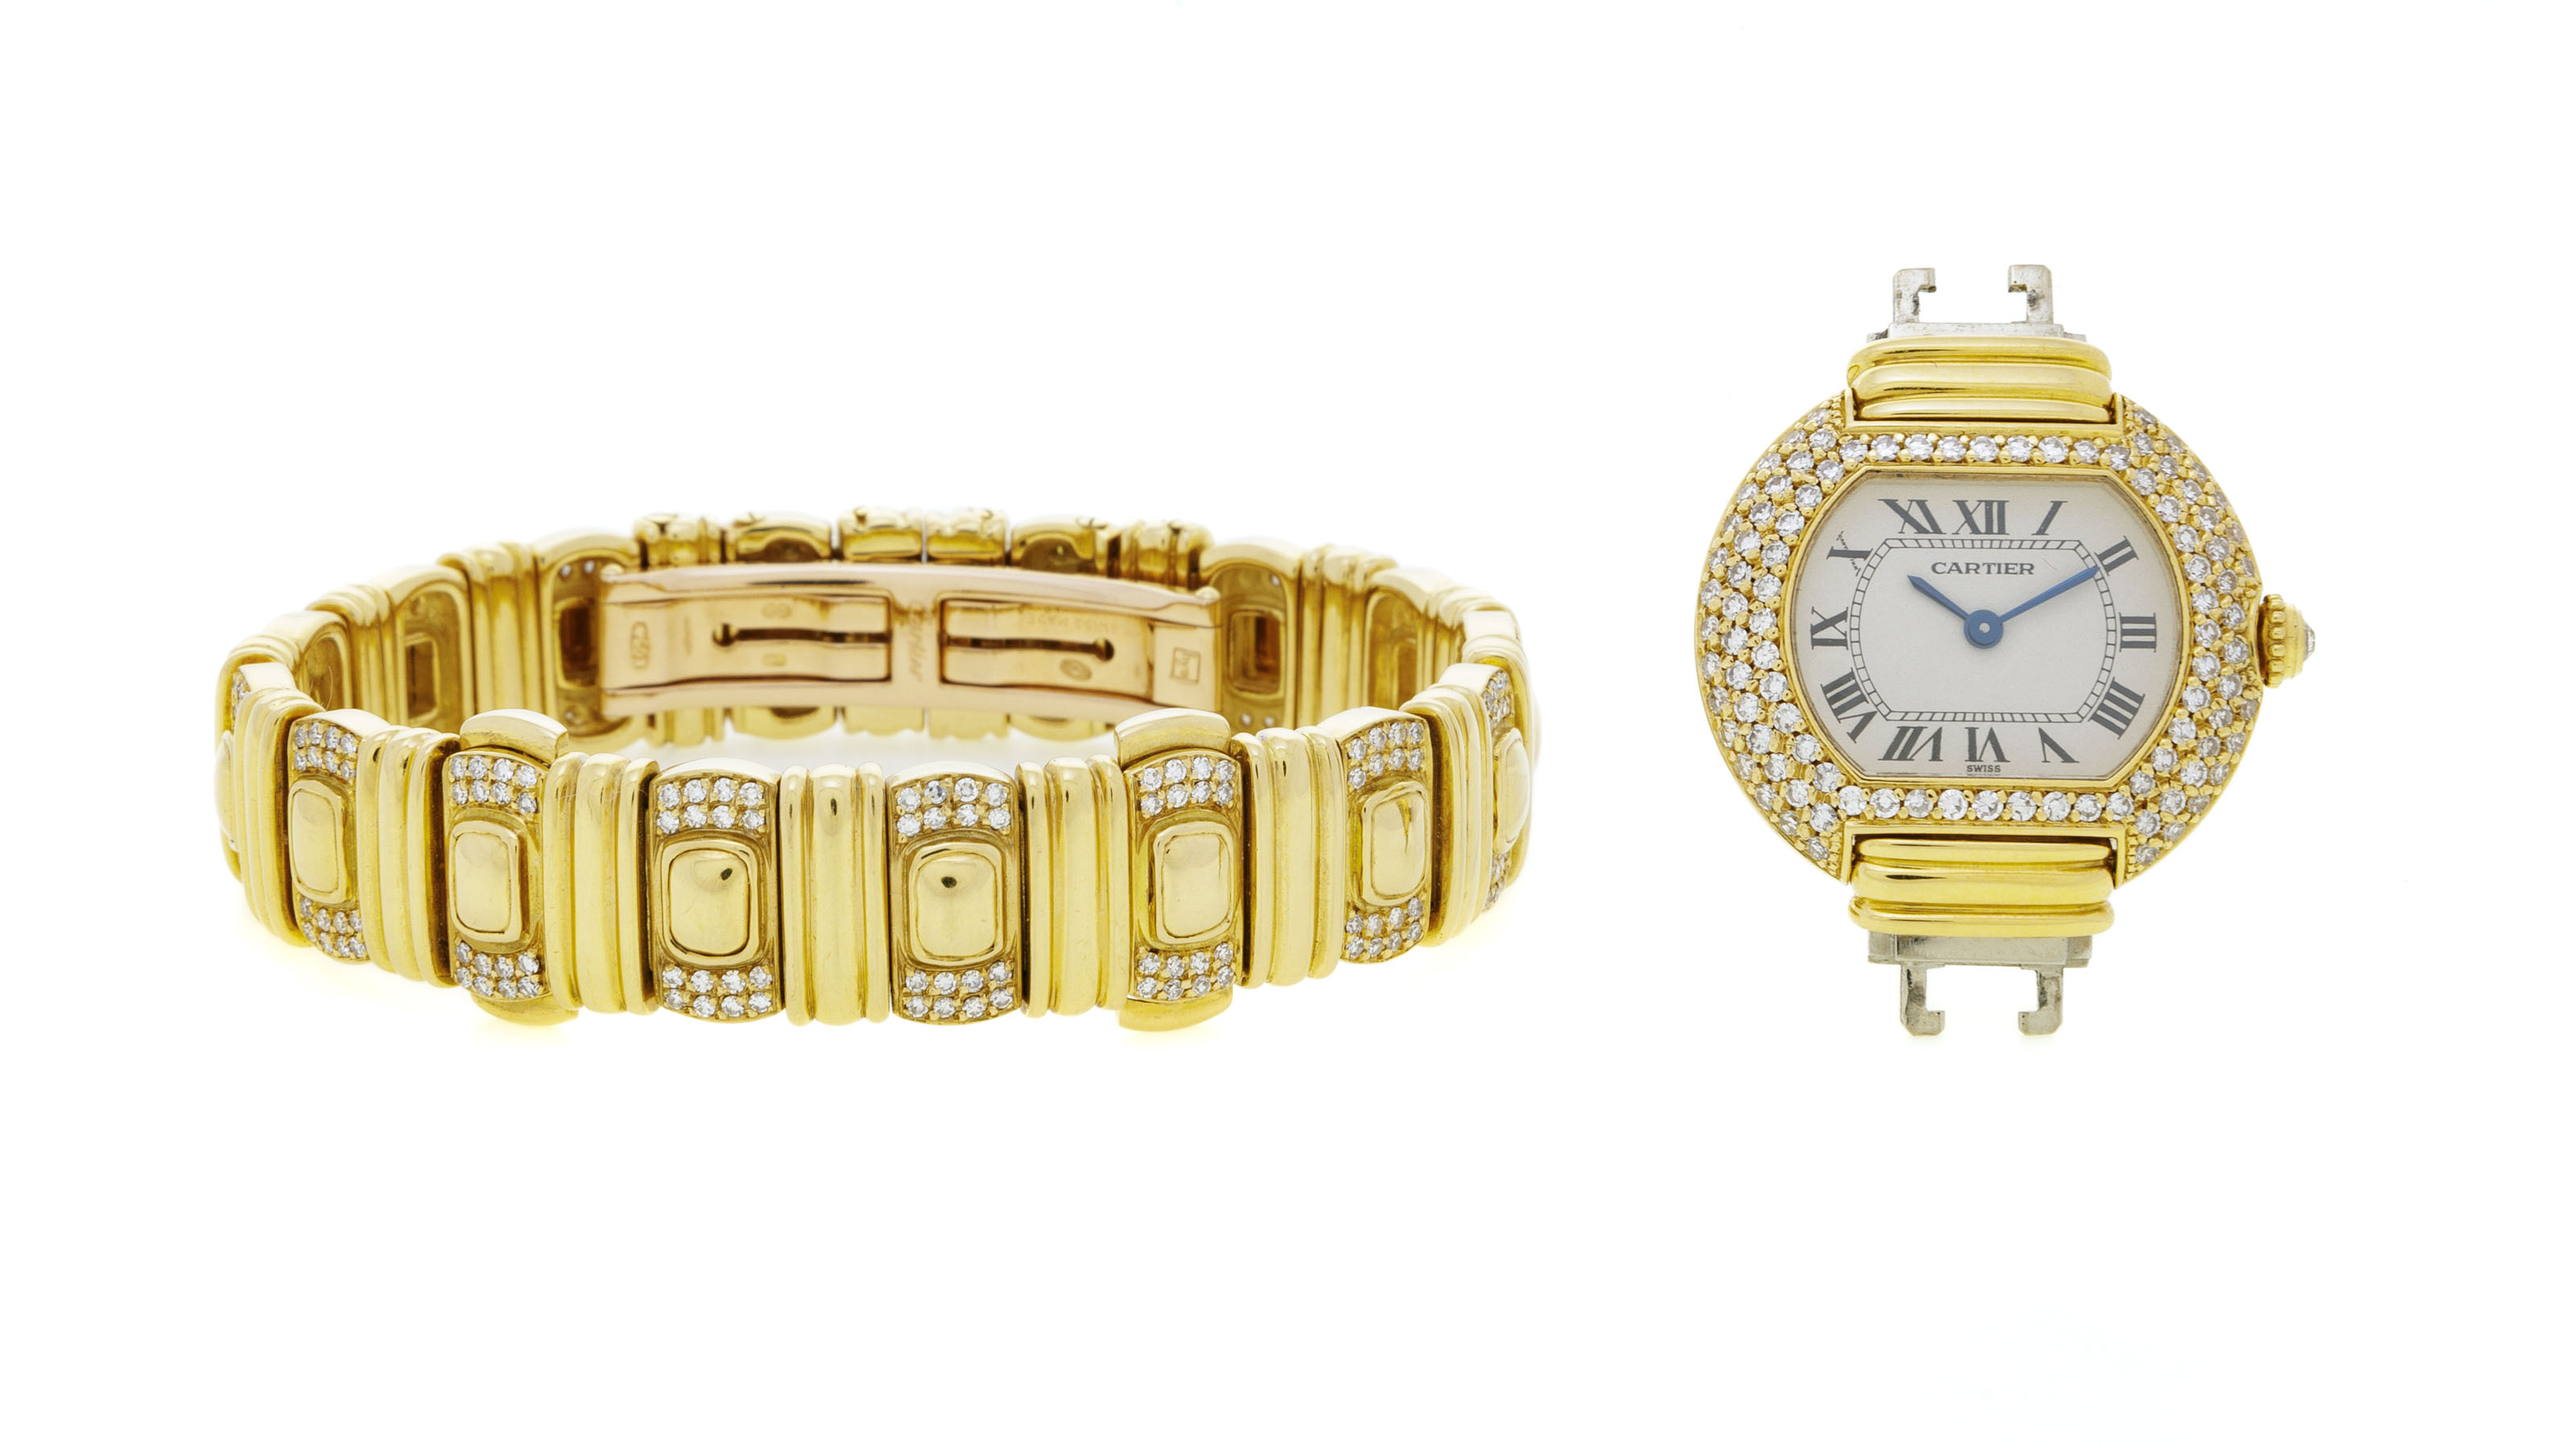 Cartier, Ellipse, montre-bracelet en or 750 sertie de diamants, transformable en bracelet - Image 4 of 6